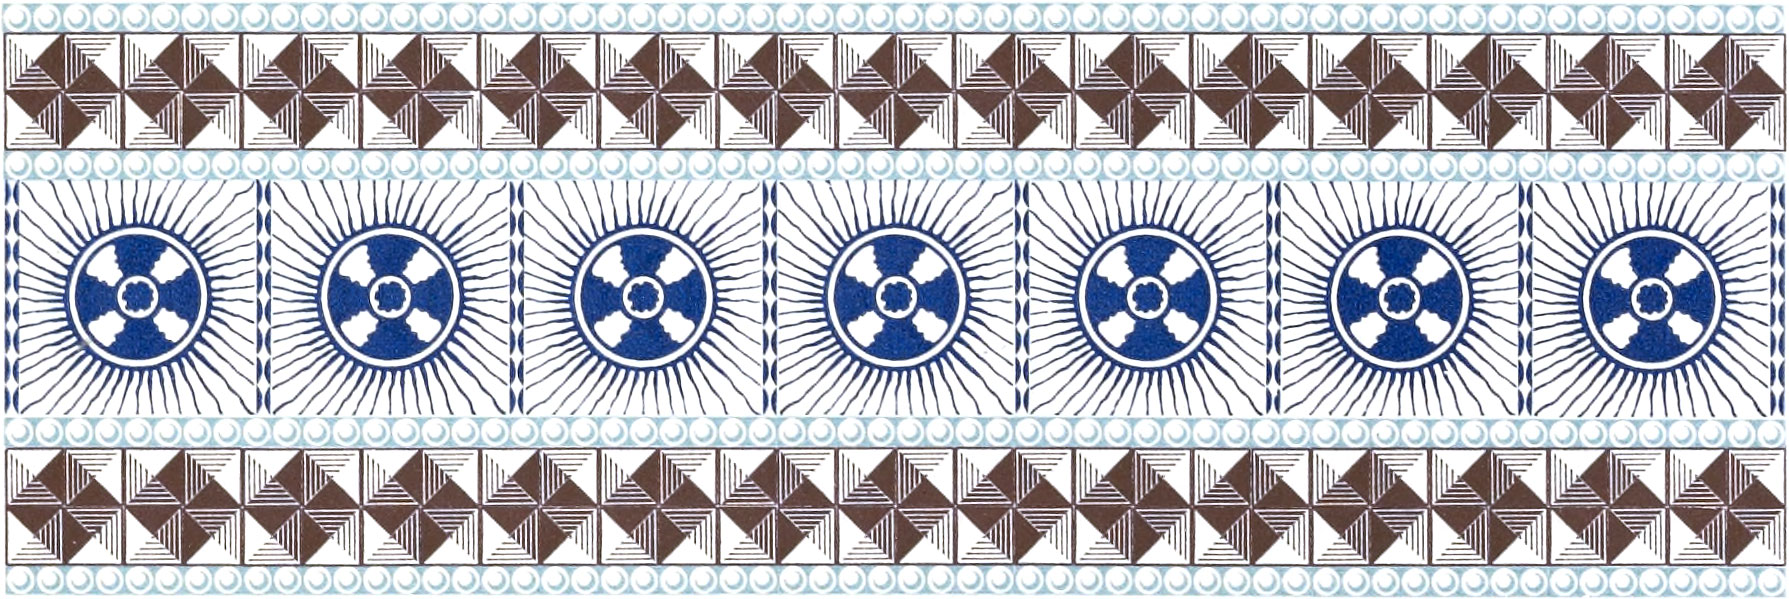 Ornate geometric pattern